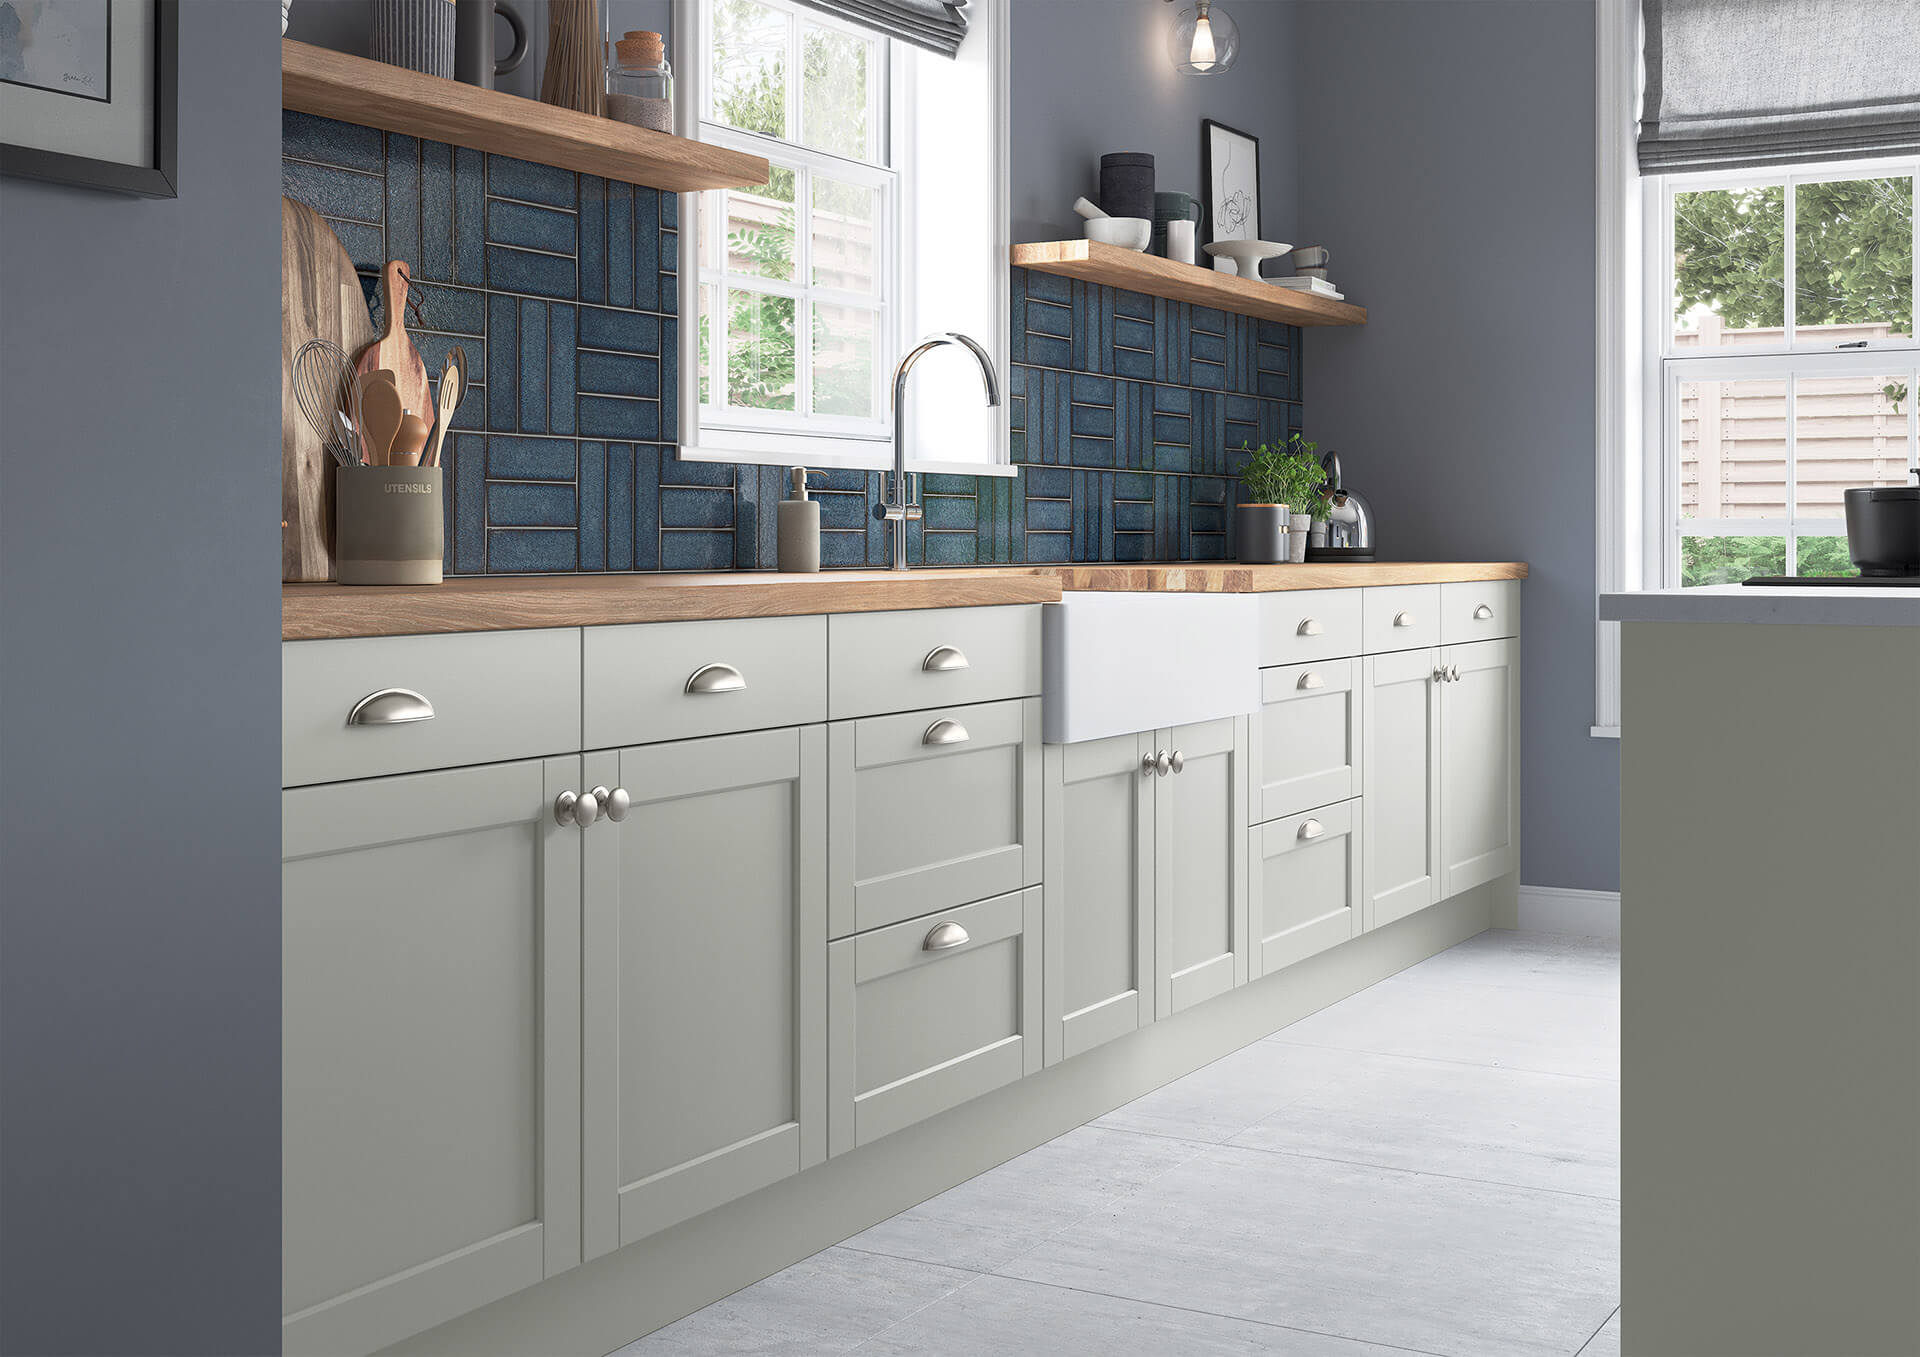 St Mellion Signature Kitchen Range in Light Grey Colour Scheme